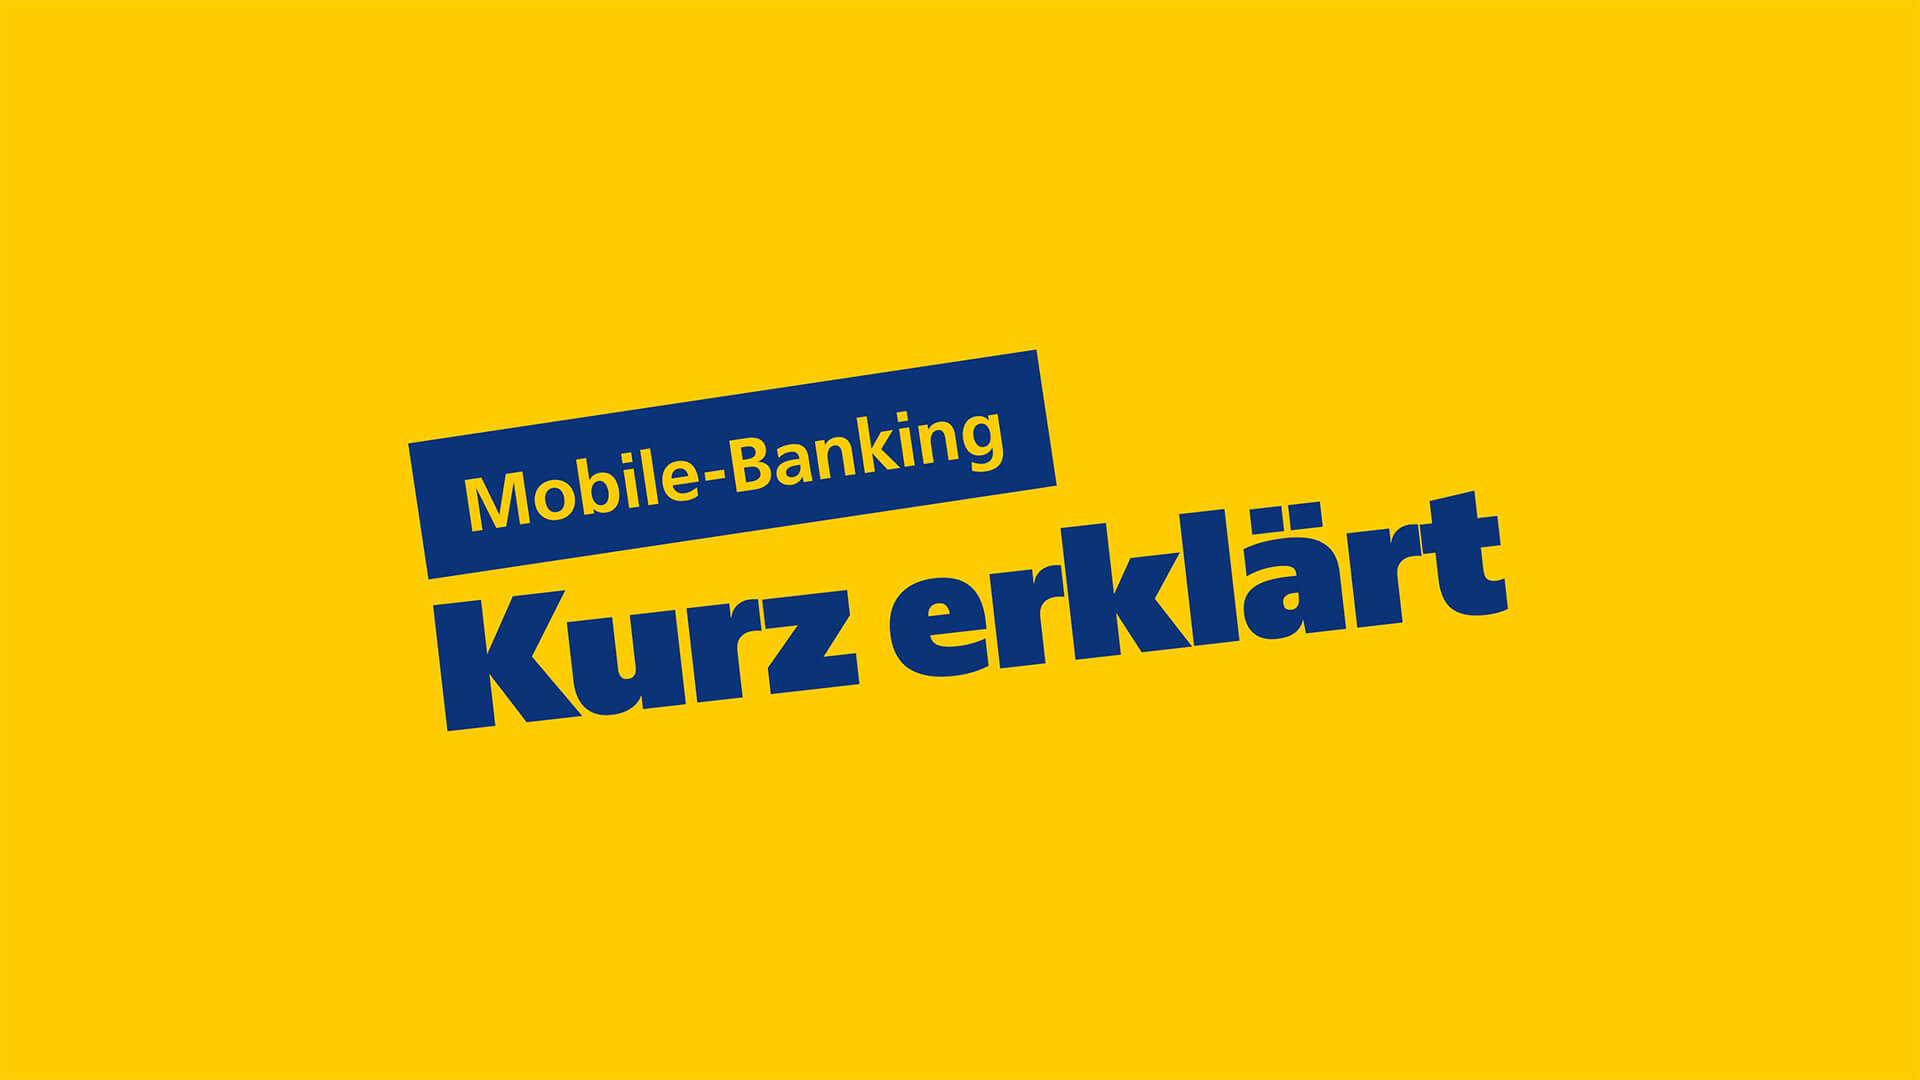 Mobile-Banking kurz erklärt